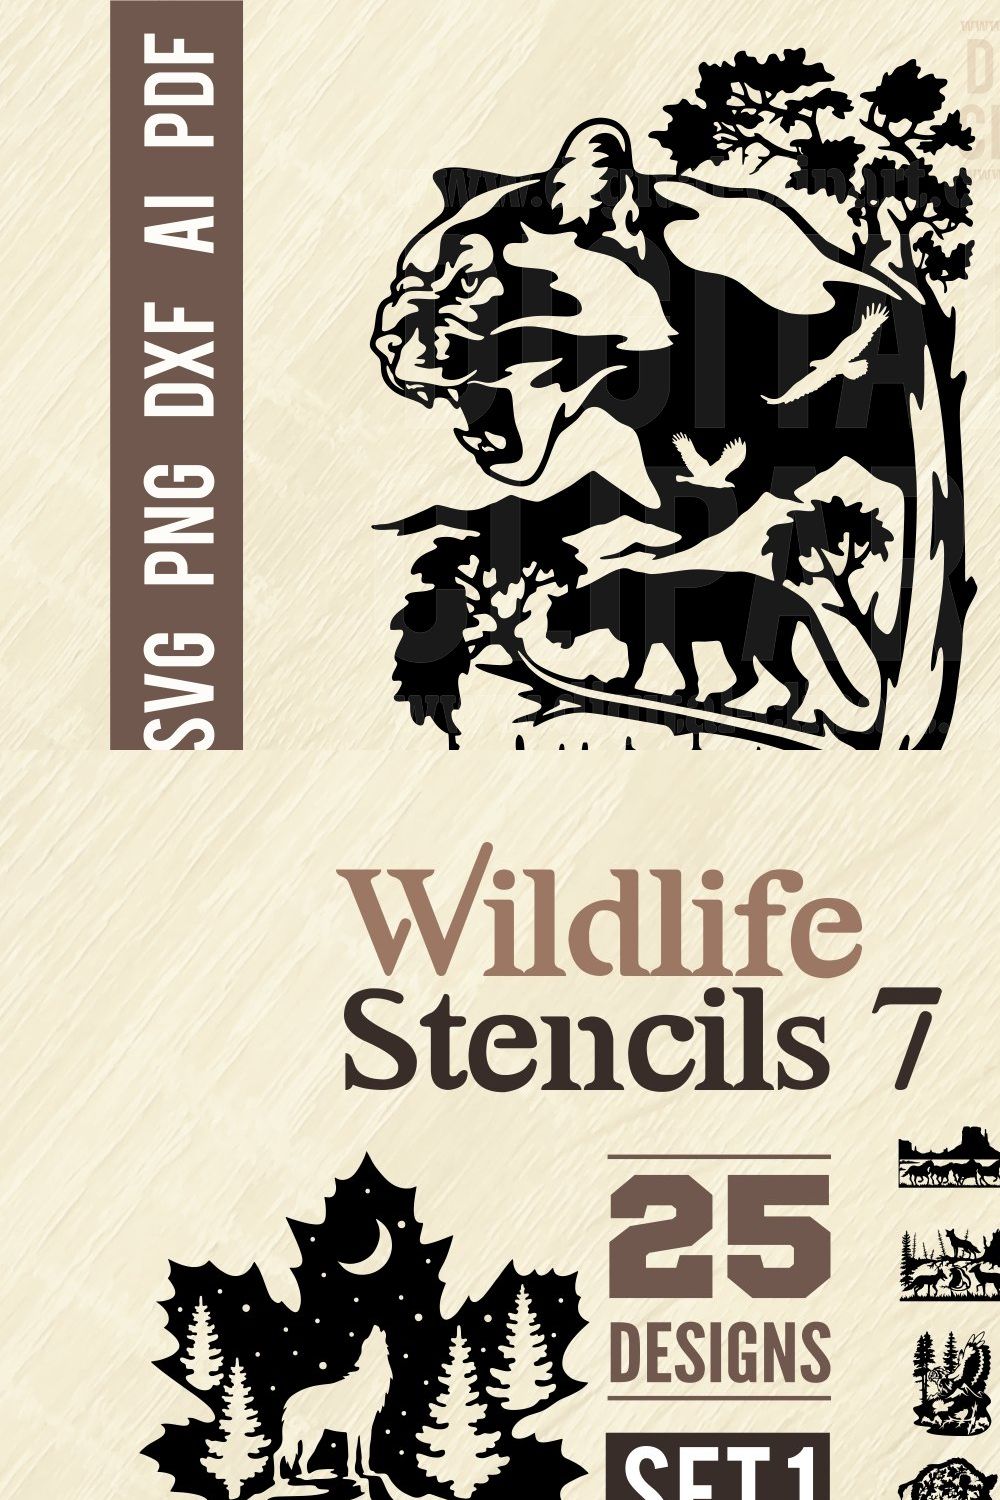 Cougar SVG File - Wildlife Stencils pinterest preview image.